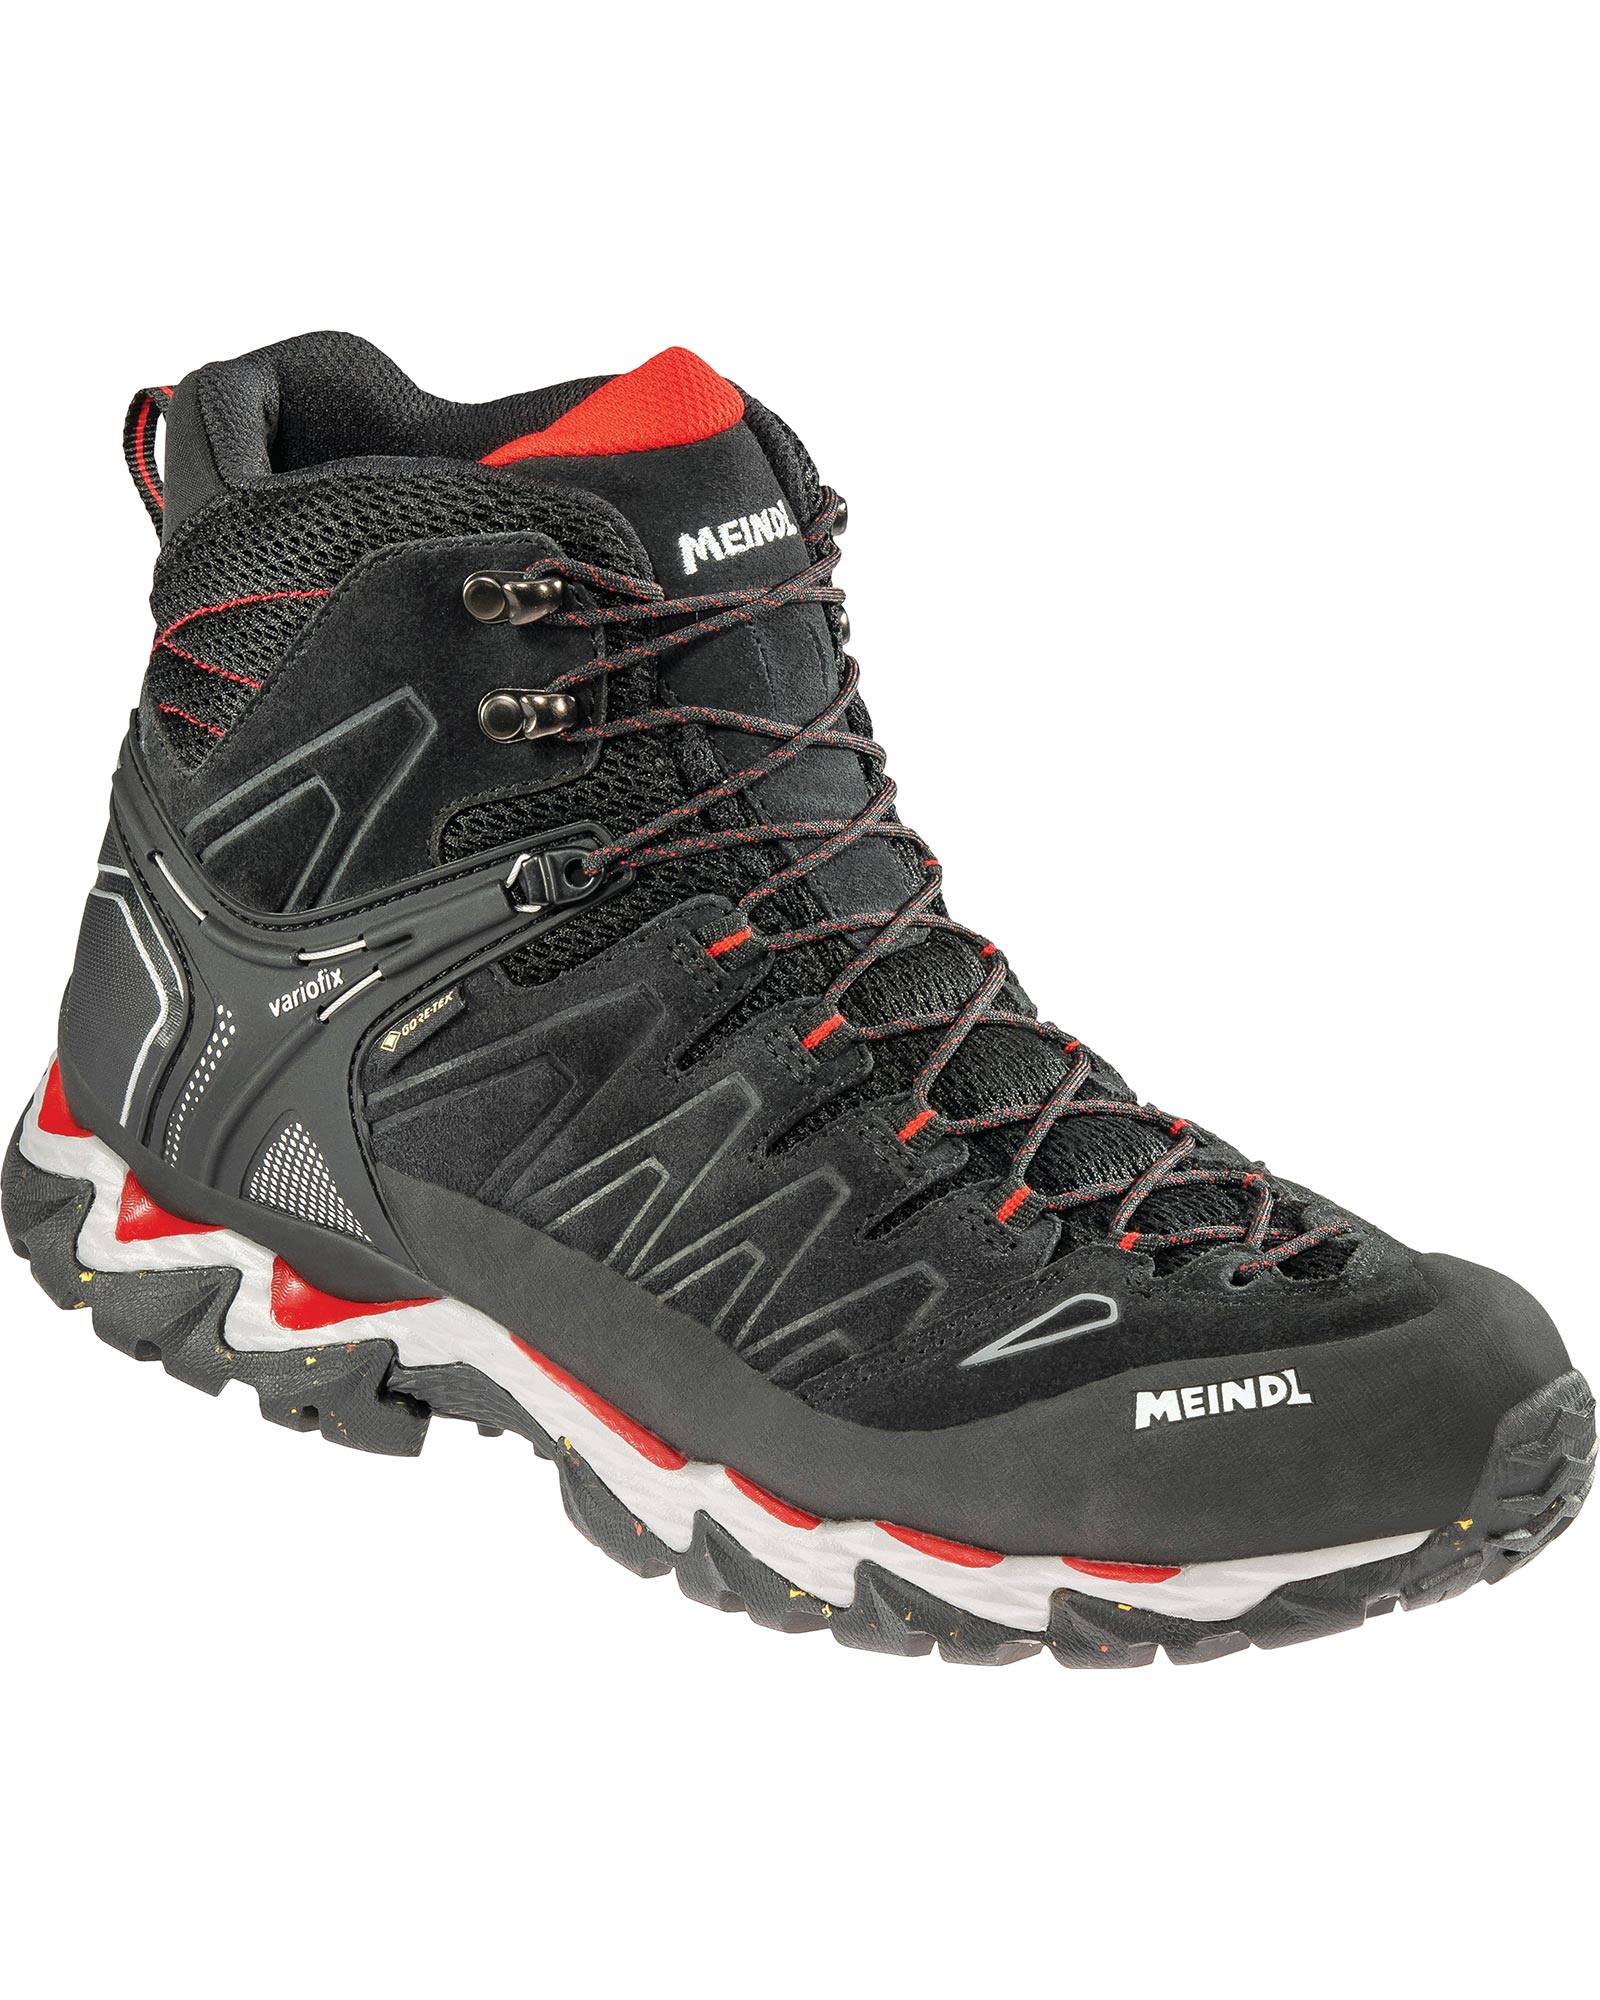 Meindl Lite Hike GORE TEX Men’s Boots - Black/Red UK 8